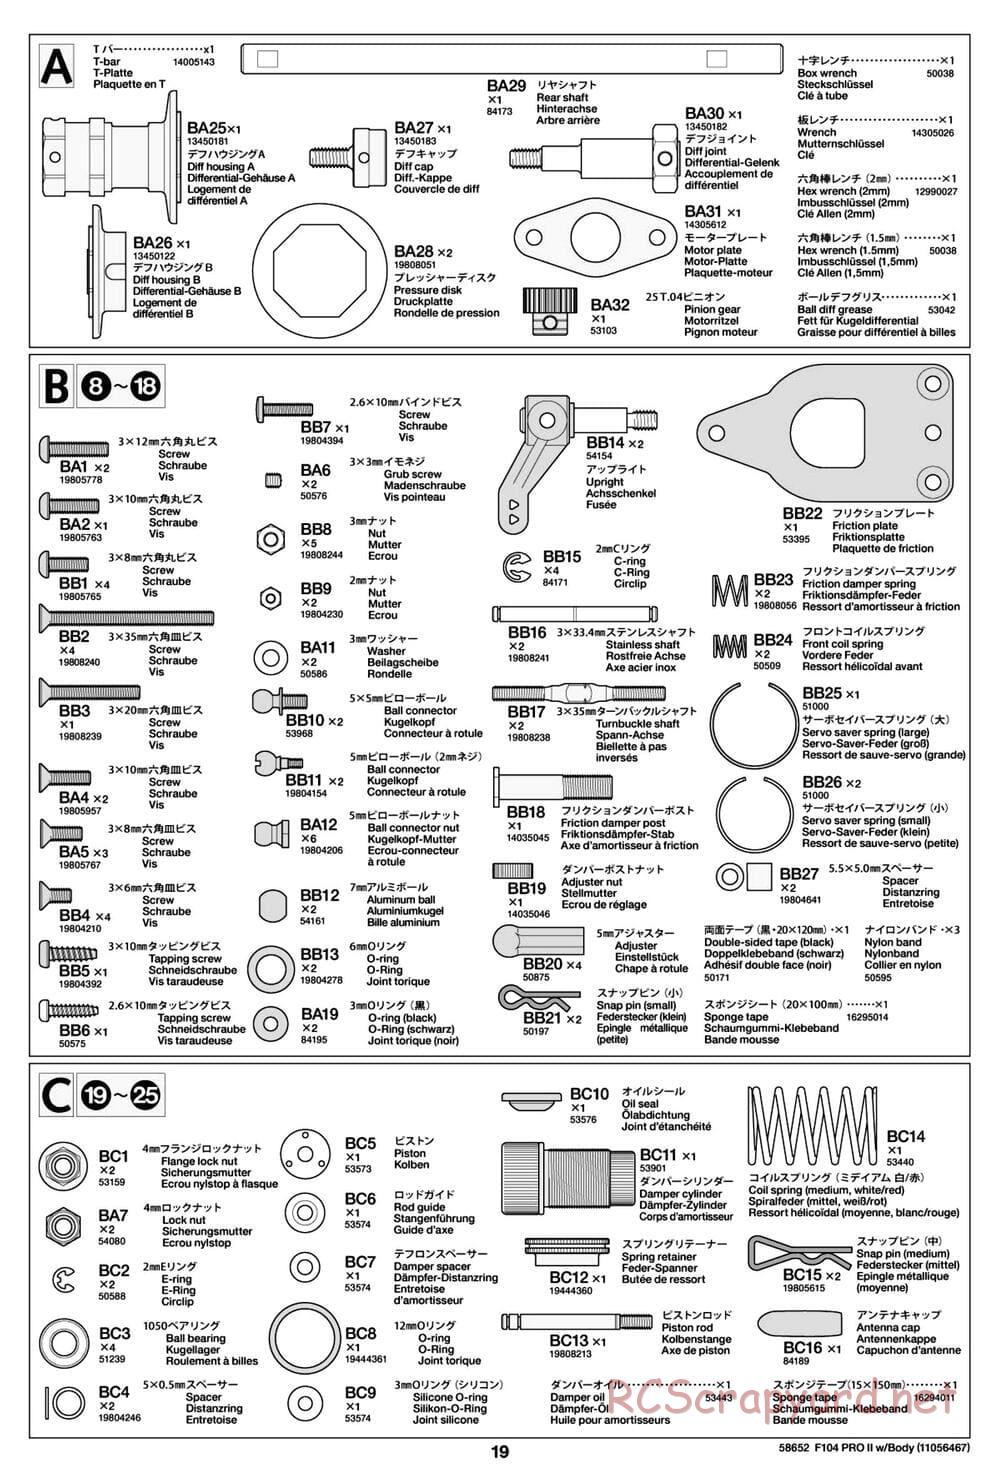 Tamiya - F104 Pro II Chassis - Manual - Page 19